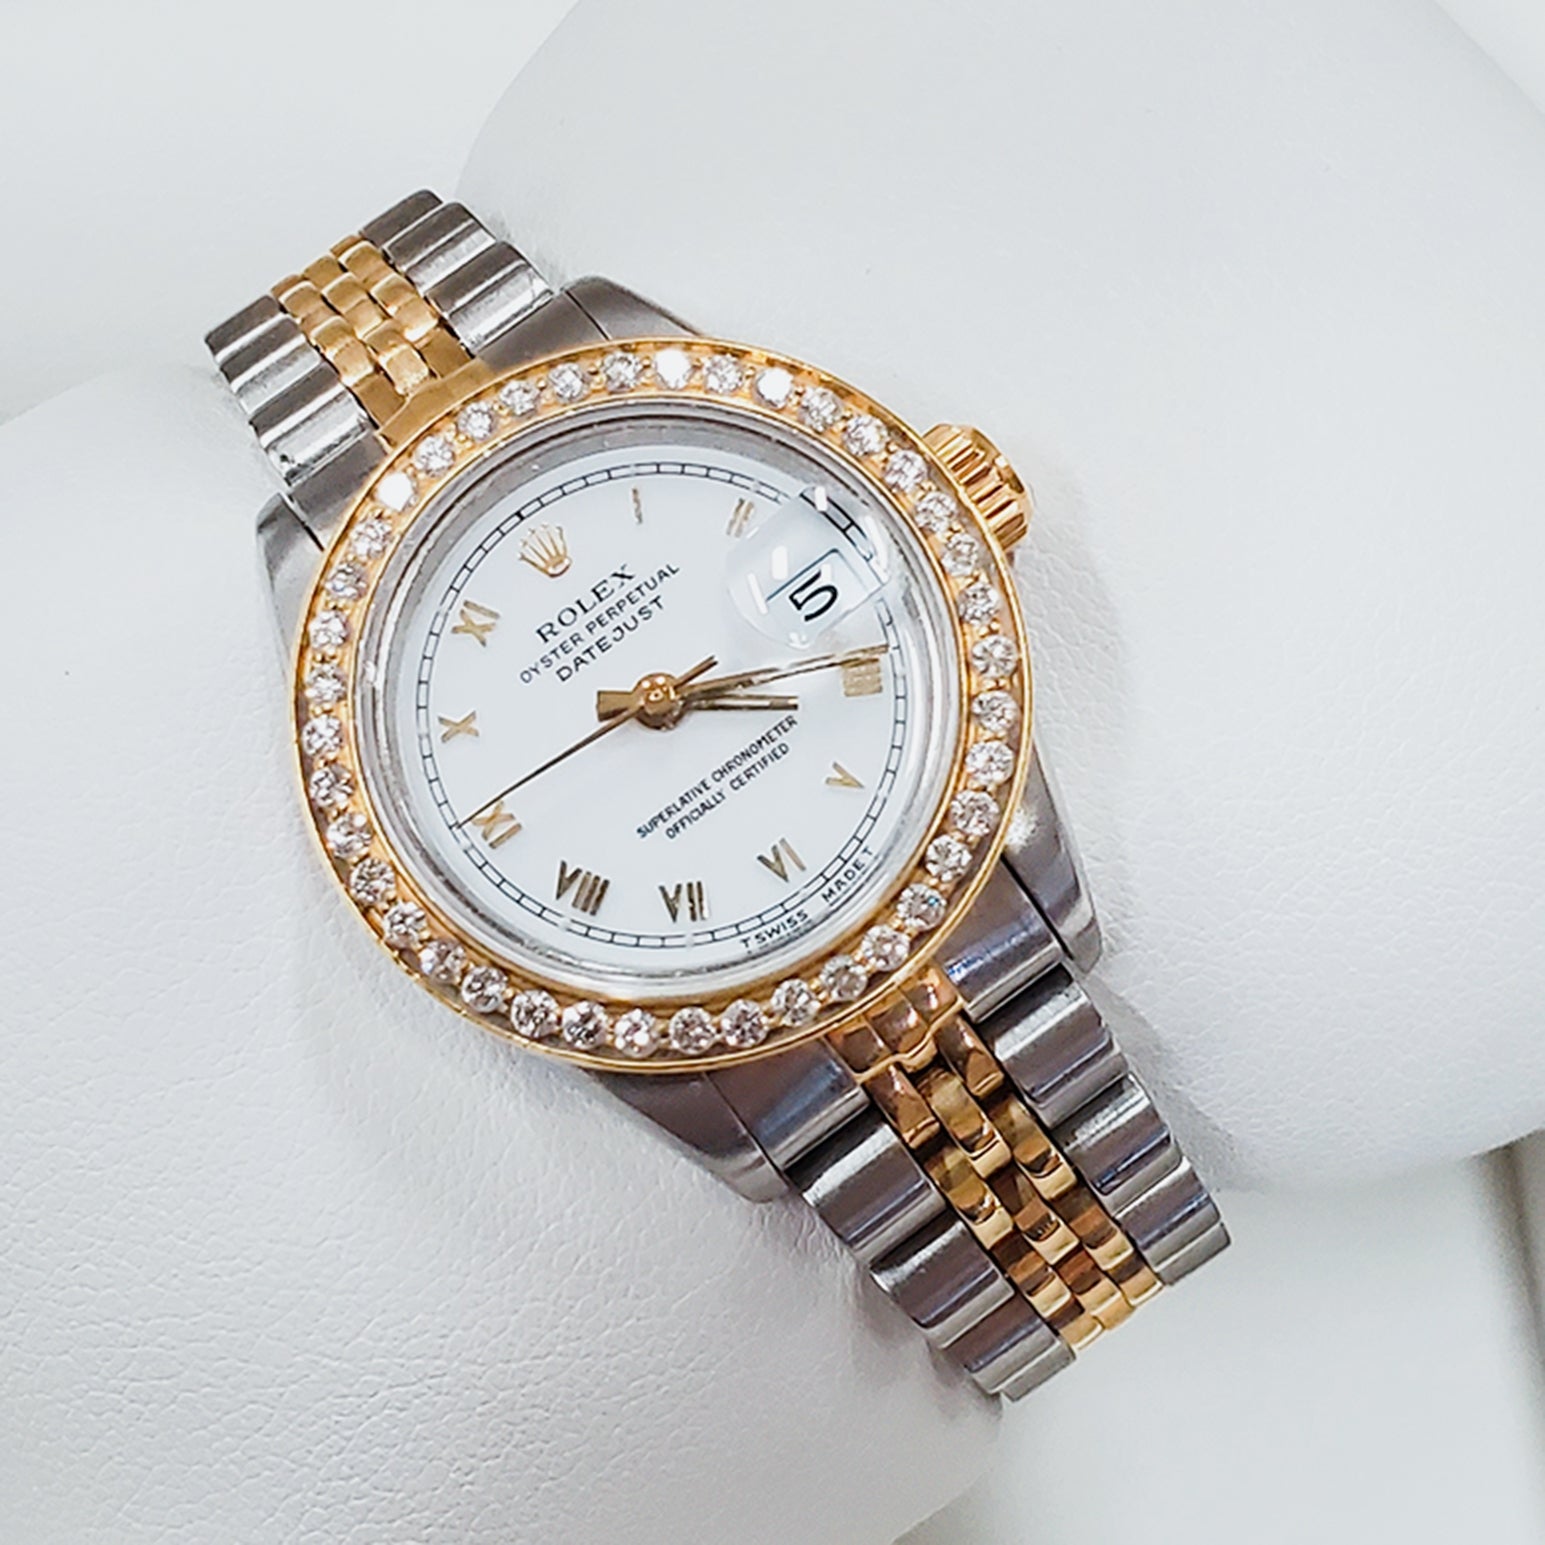 Ladies Rolex 18K Gold Two Tone 26mm DateJust Wristwatch w/ Roman Numerals, White Dial & Diamond Bezel. (Pre-Owned)